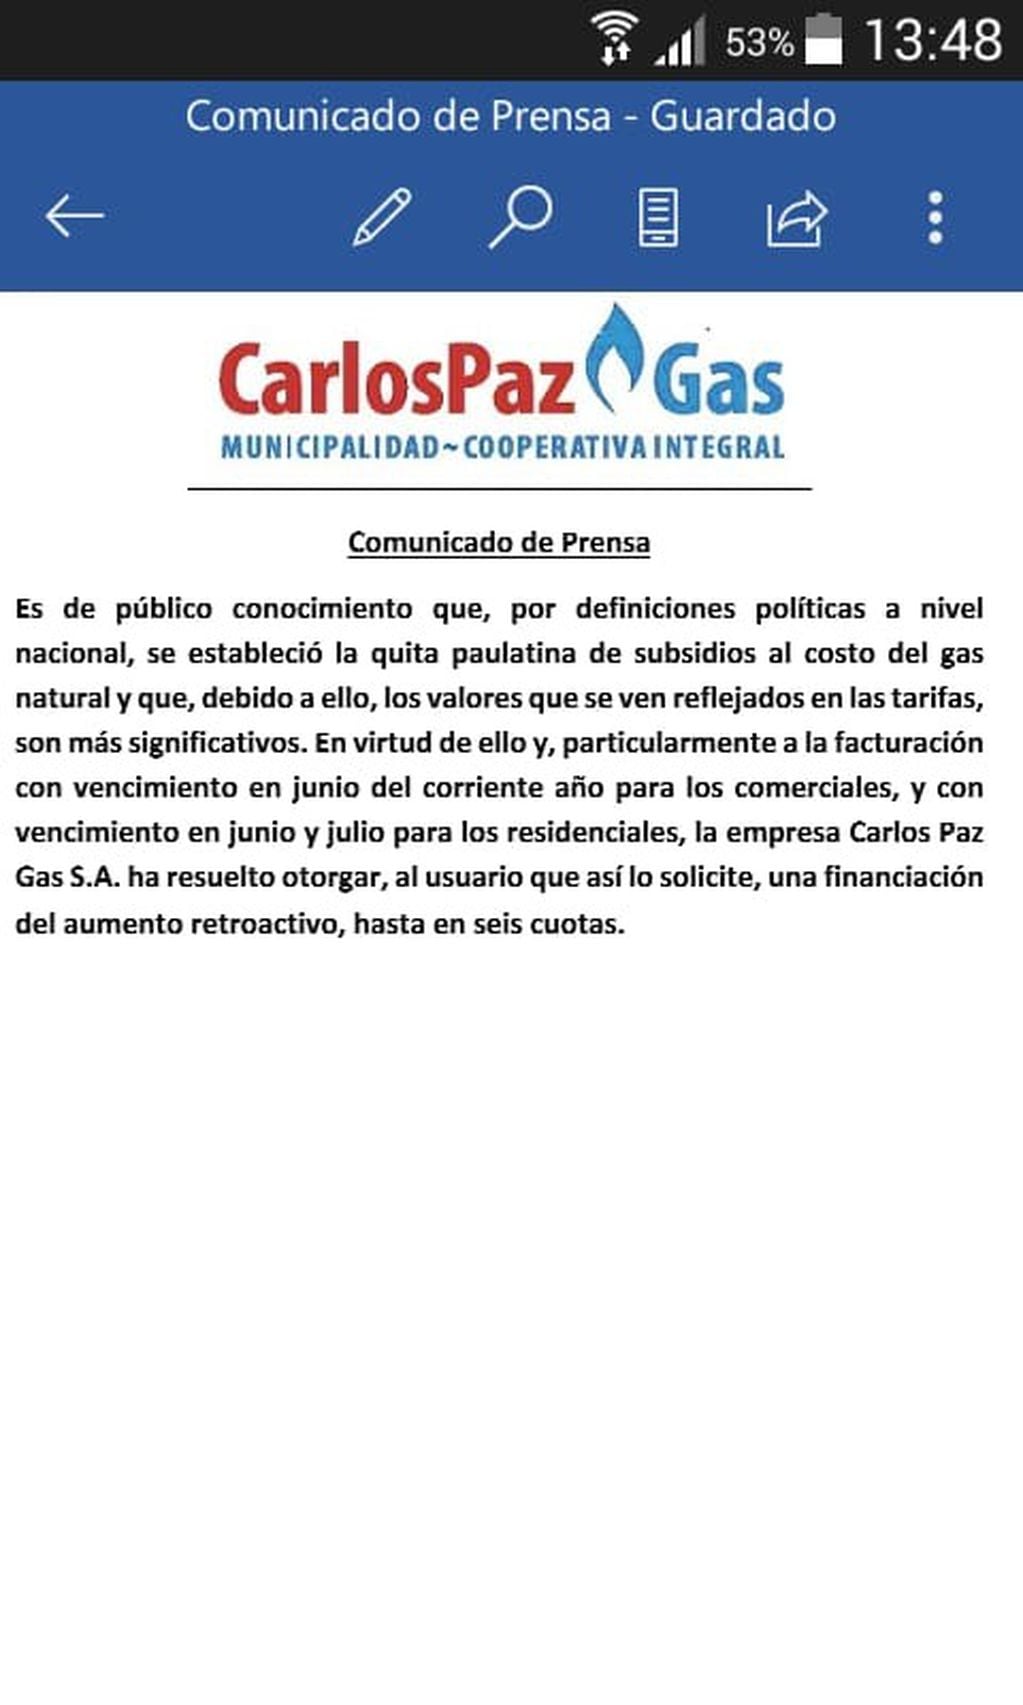 Comunicado de prensa de Carlos Paz Gas